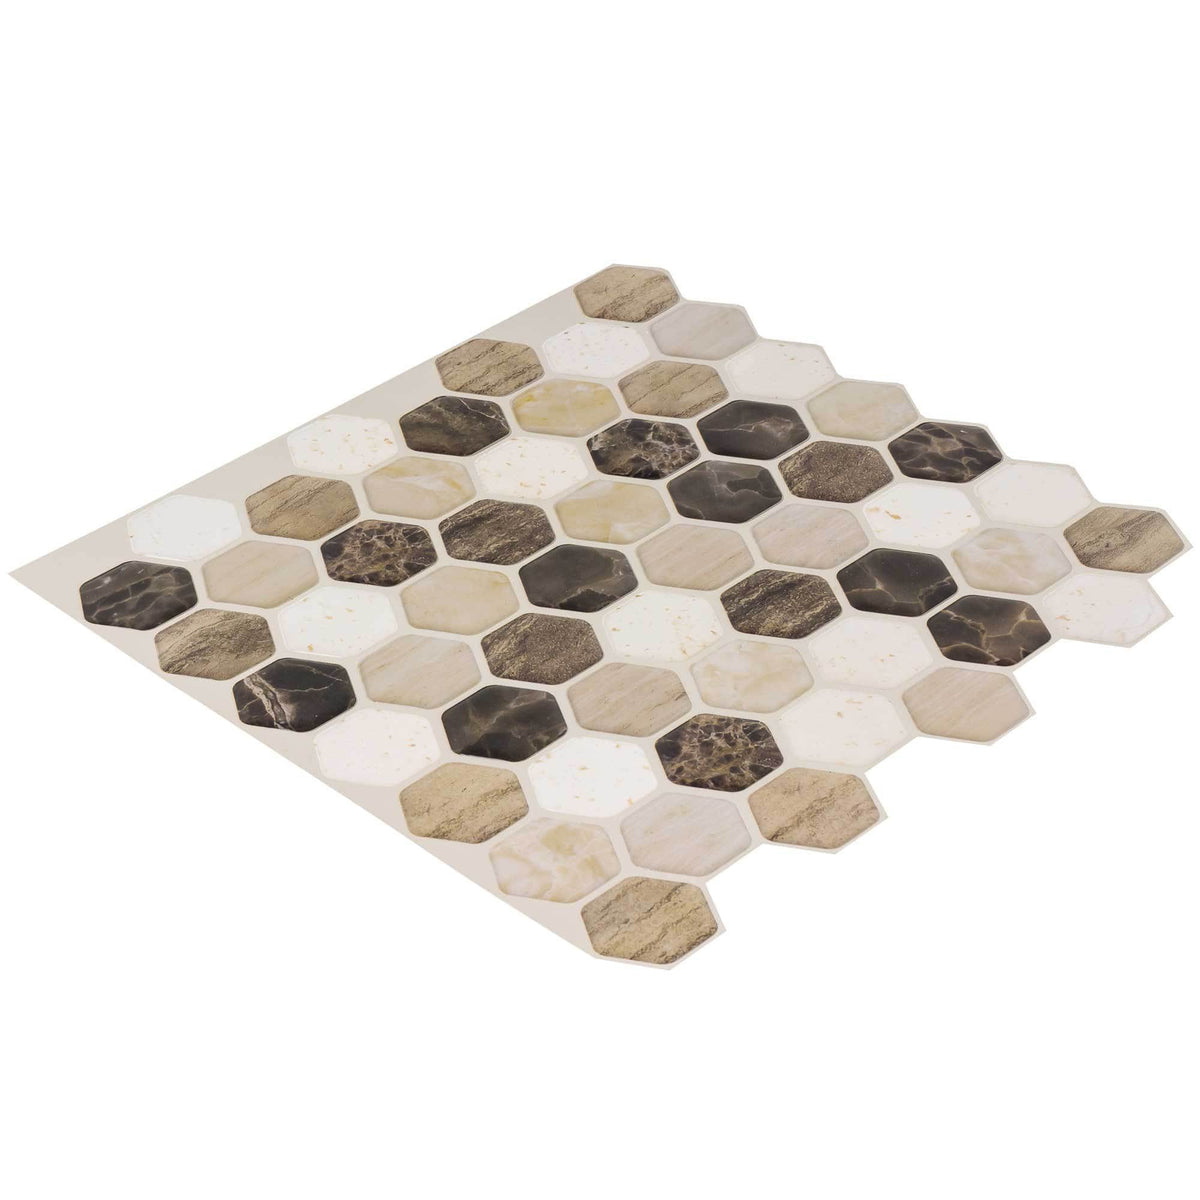 peel and stick vinyl flooring hexagon